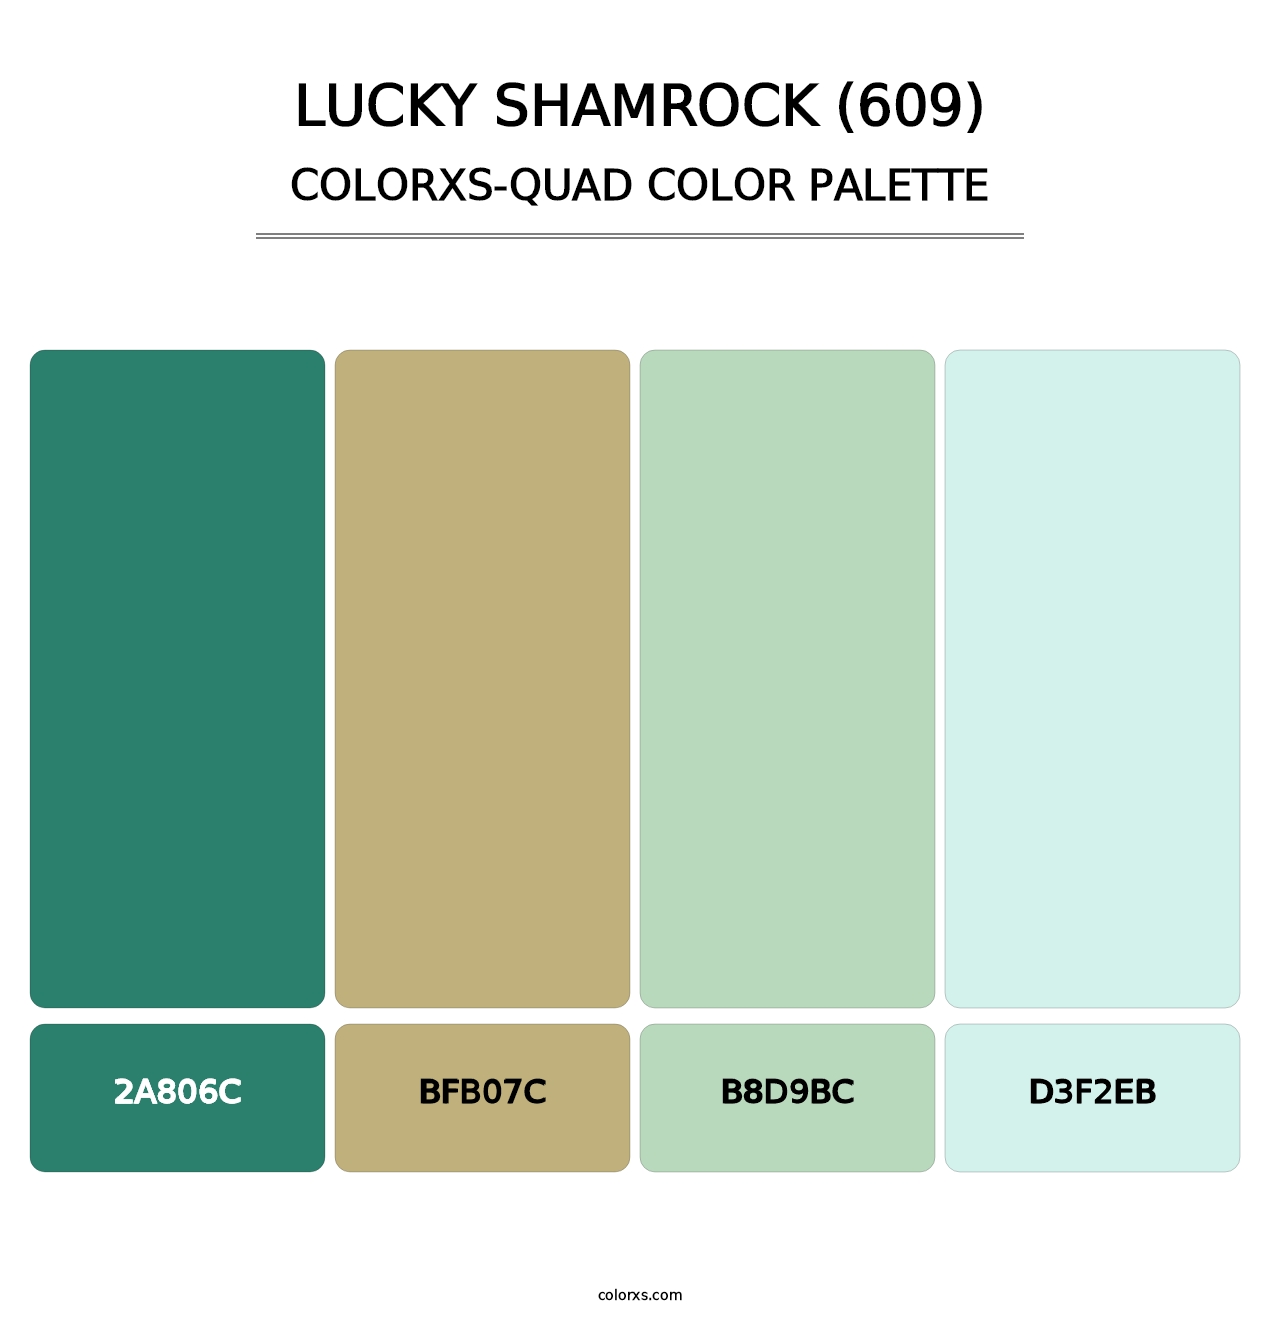 Lucky Shamrock (609) - Colorxs Quad Palette